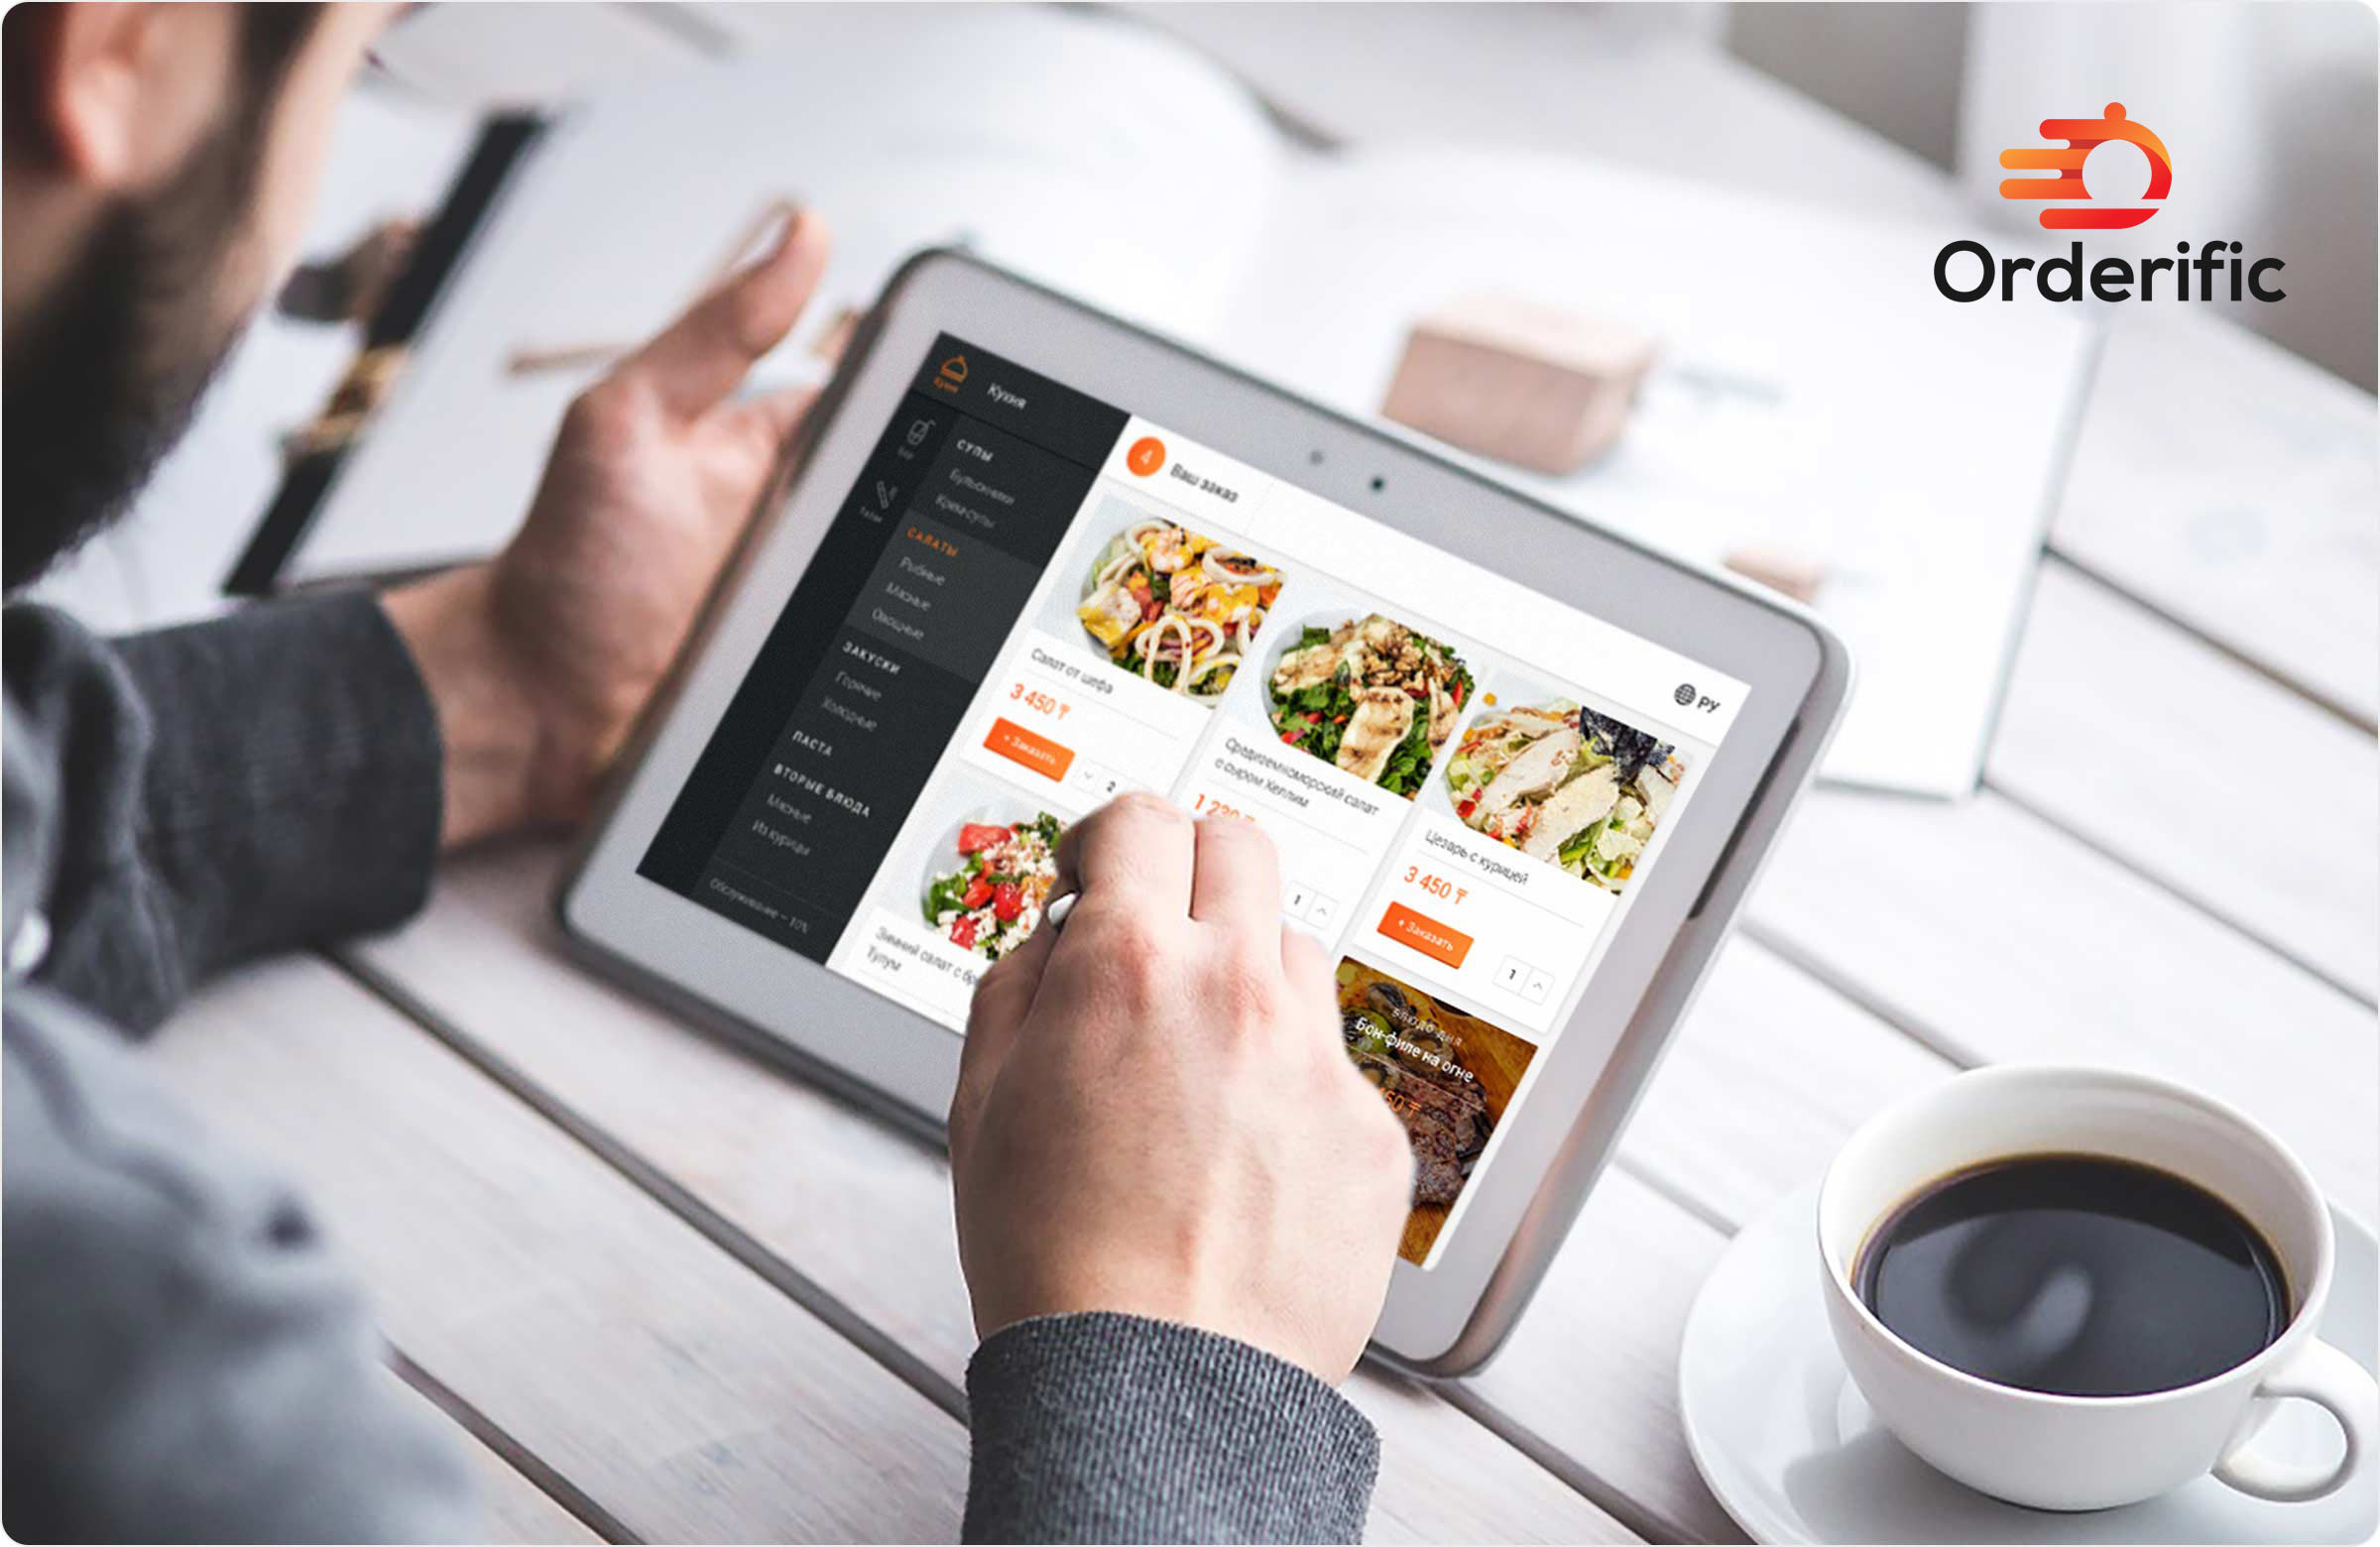 interactive menus, digital displays, menu customization